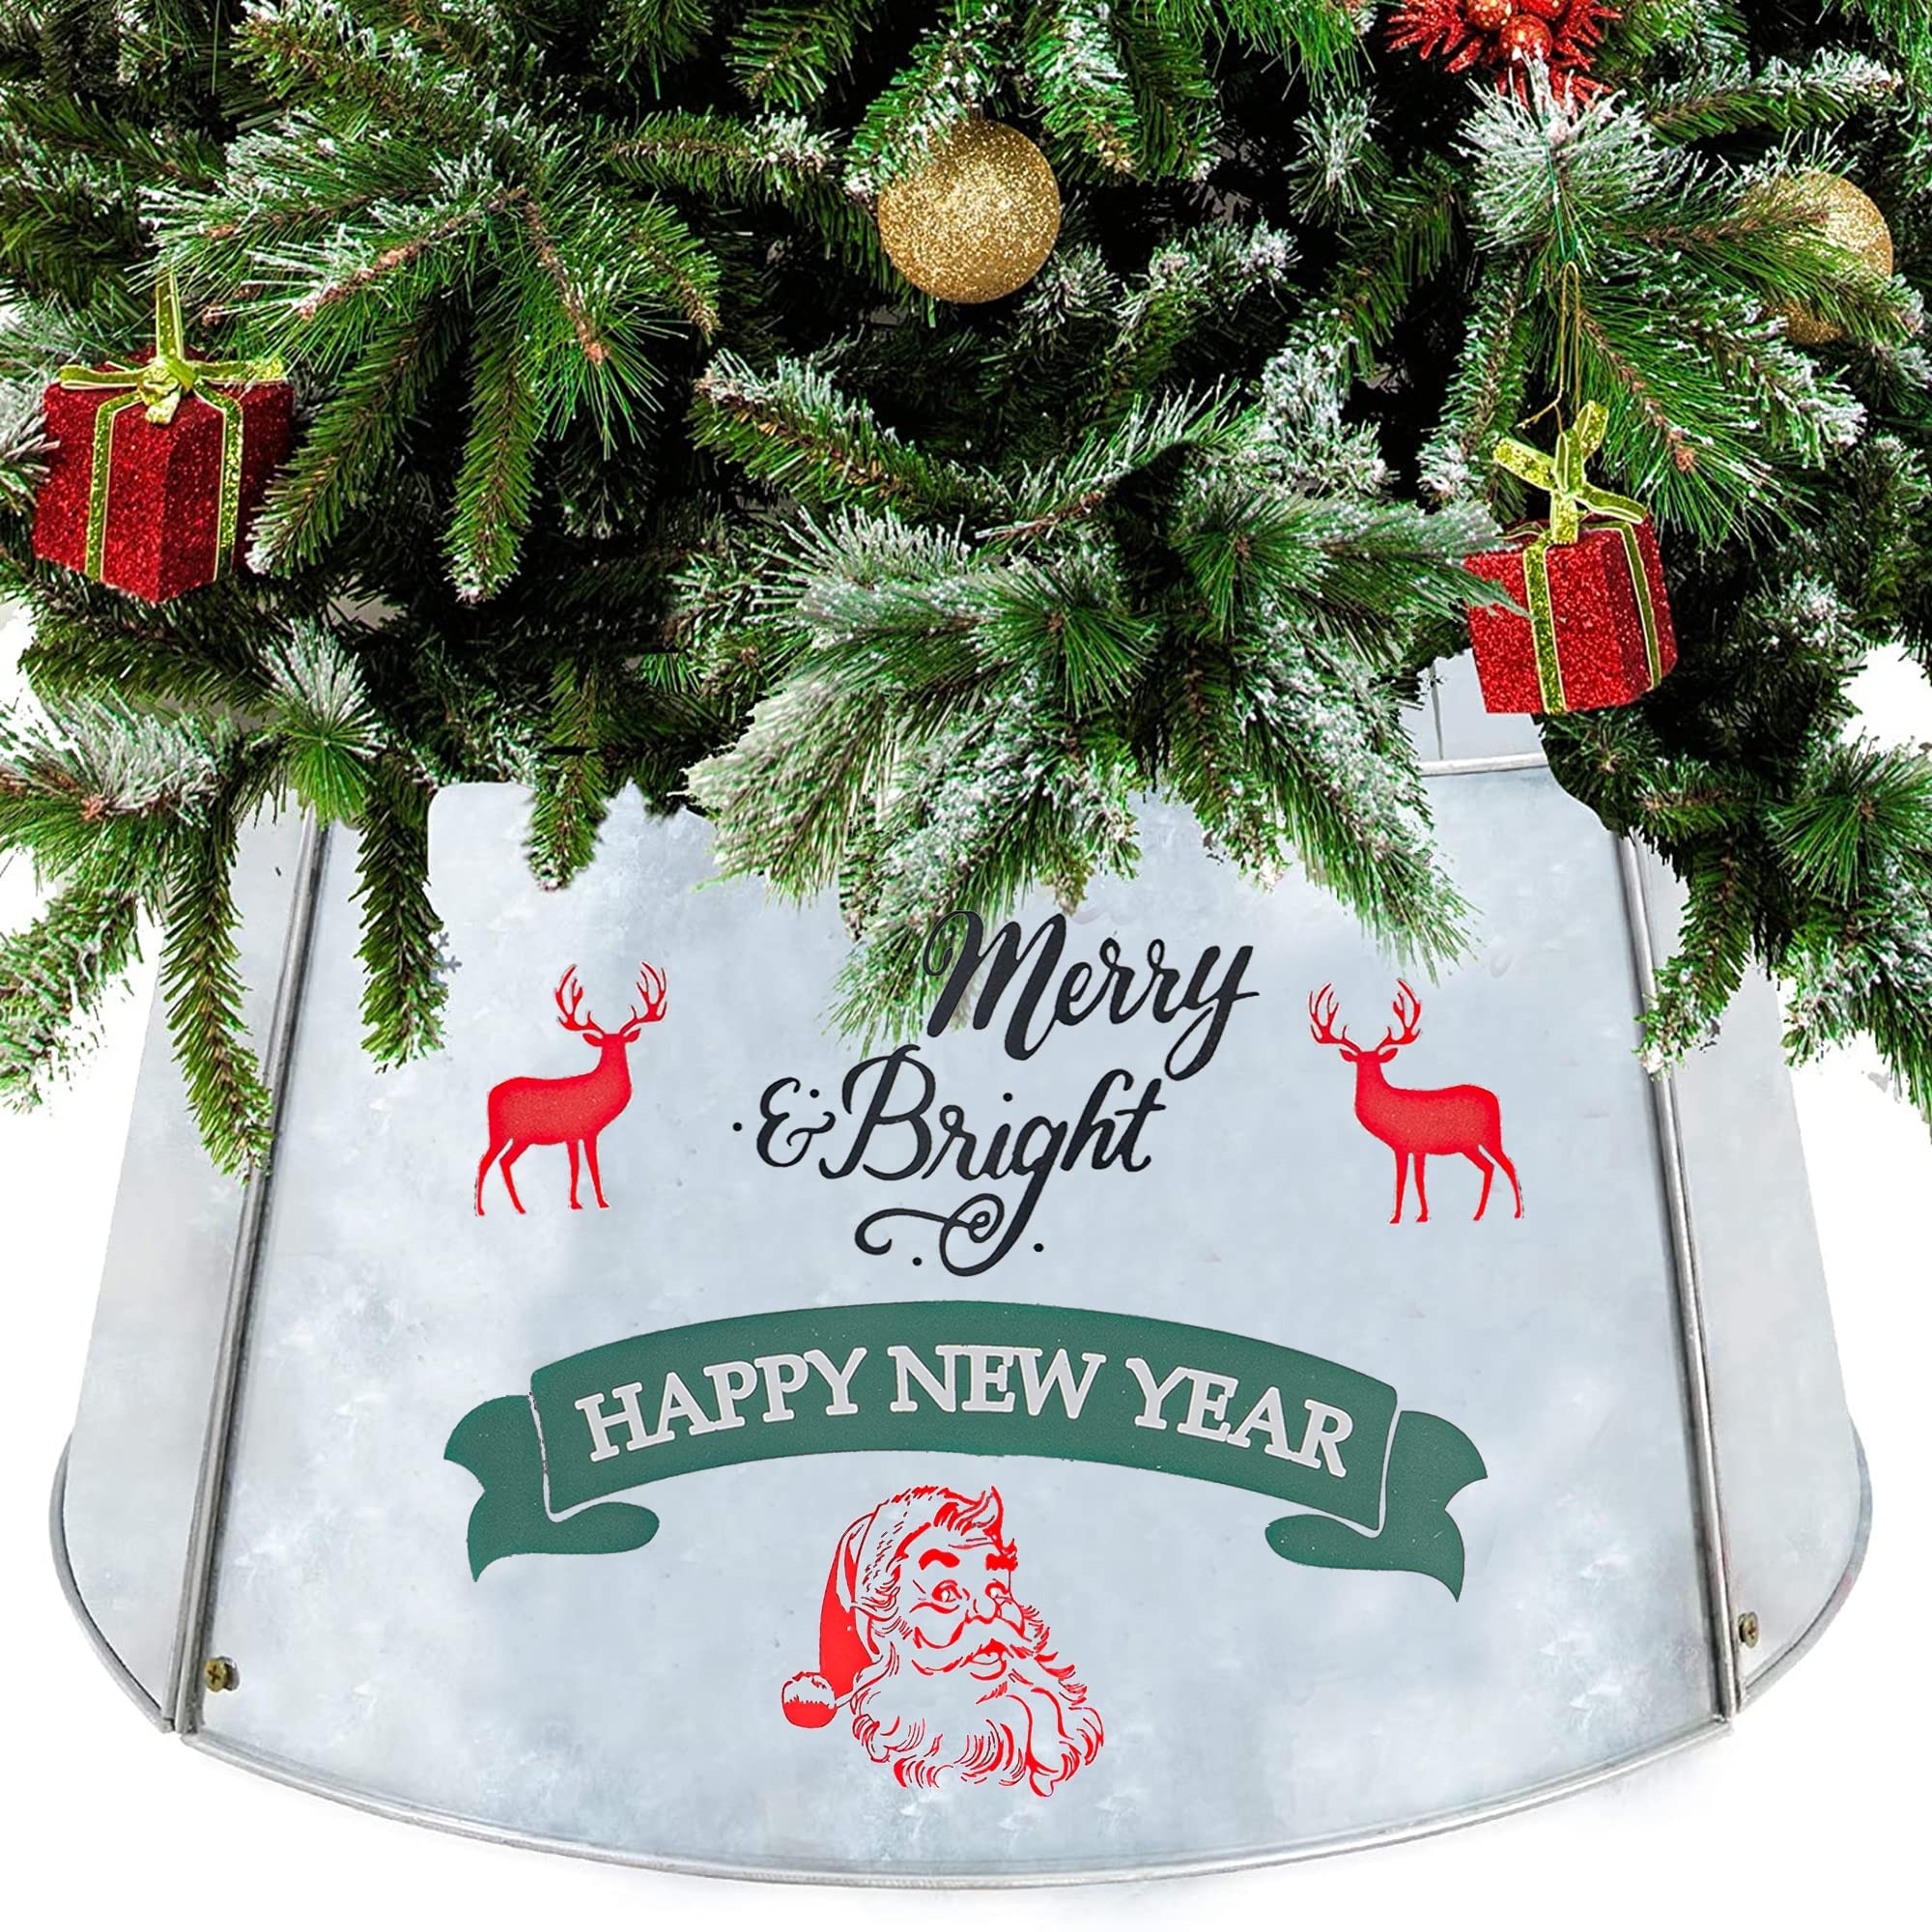 FUNPENY  21 inch Diameter Base Metal Christmas Tree Collar $14.99 + Free Shipping w/ Prime or $25+